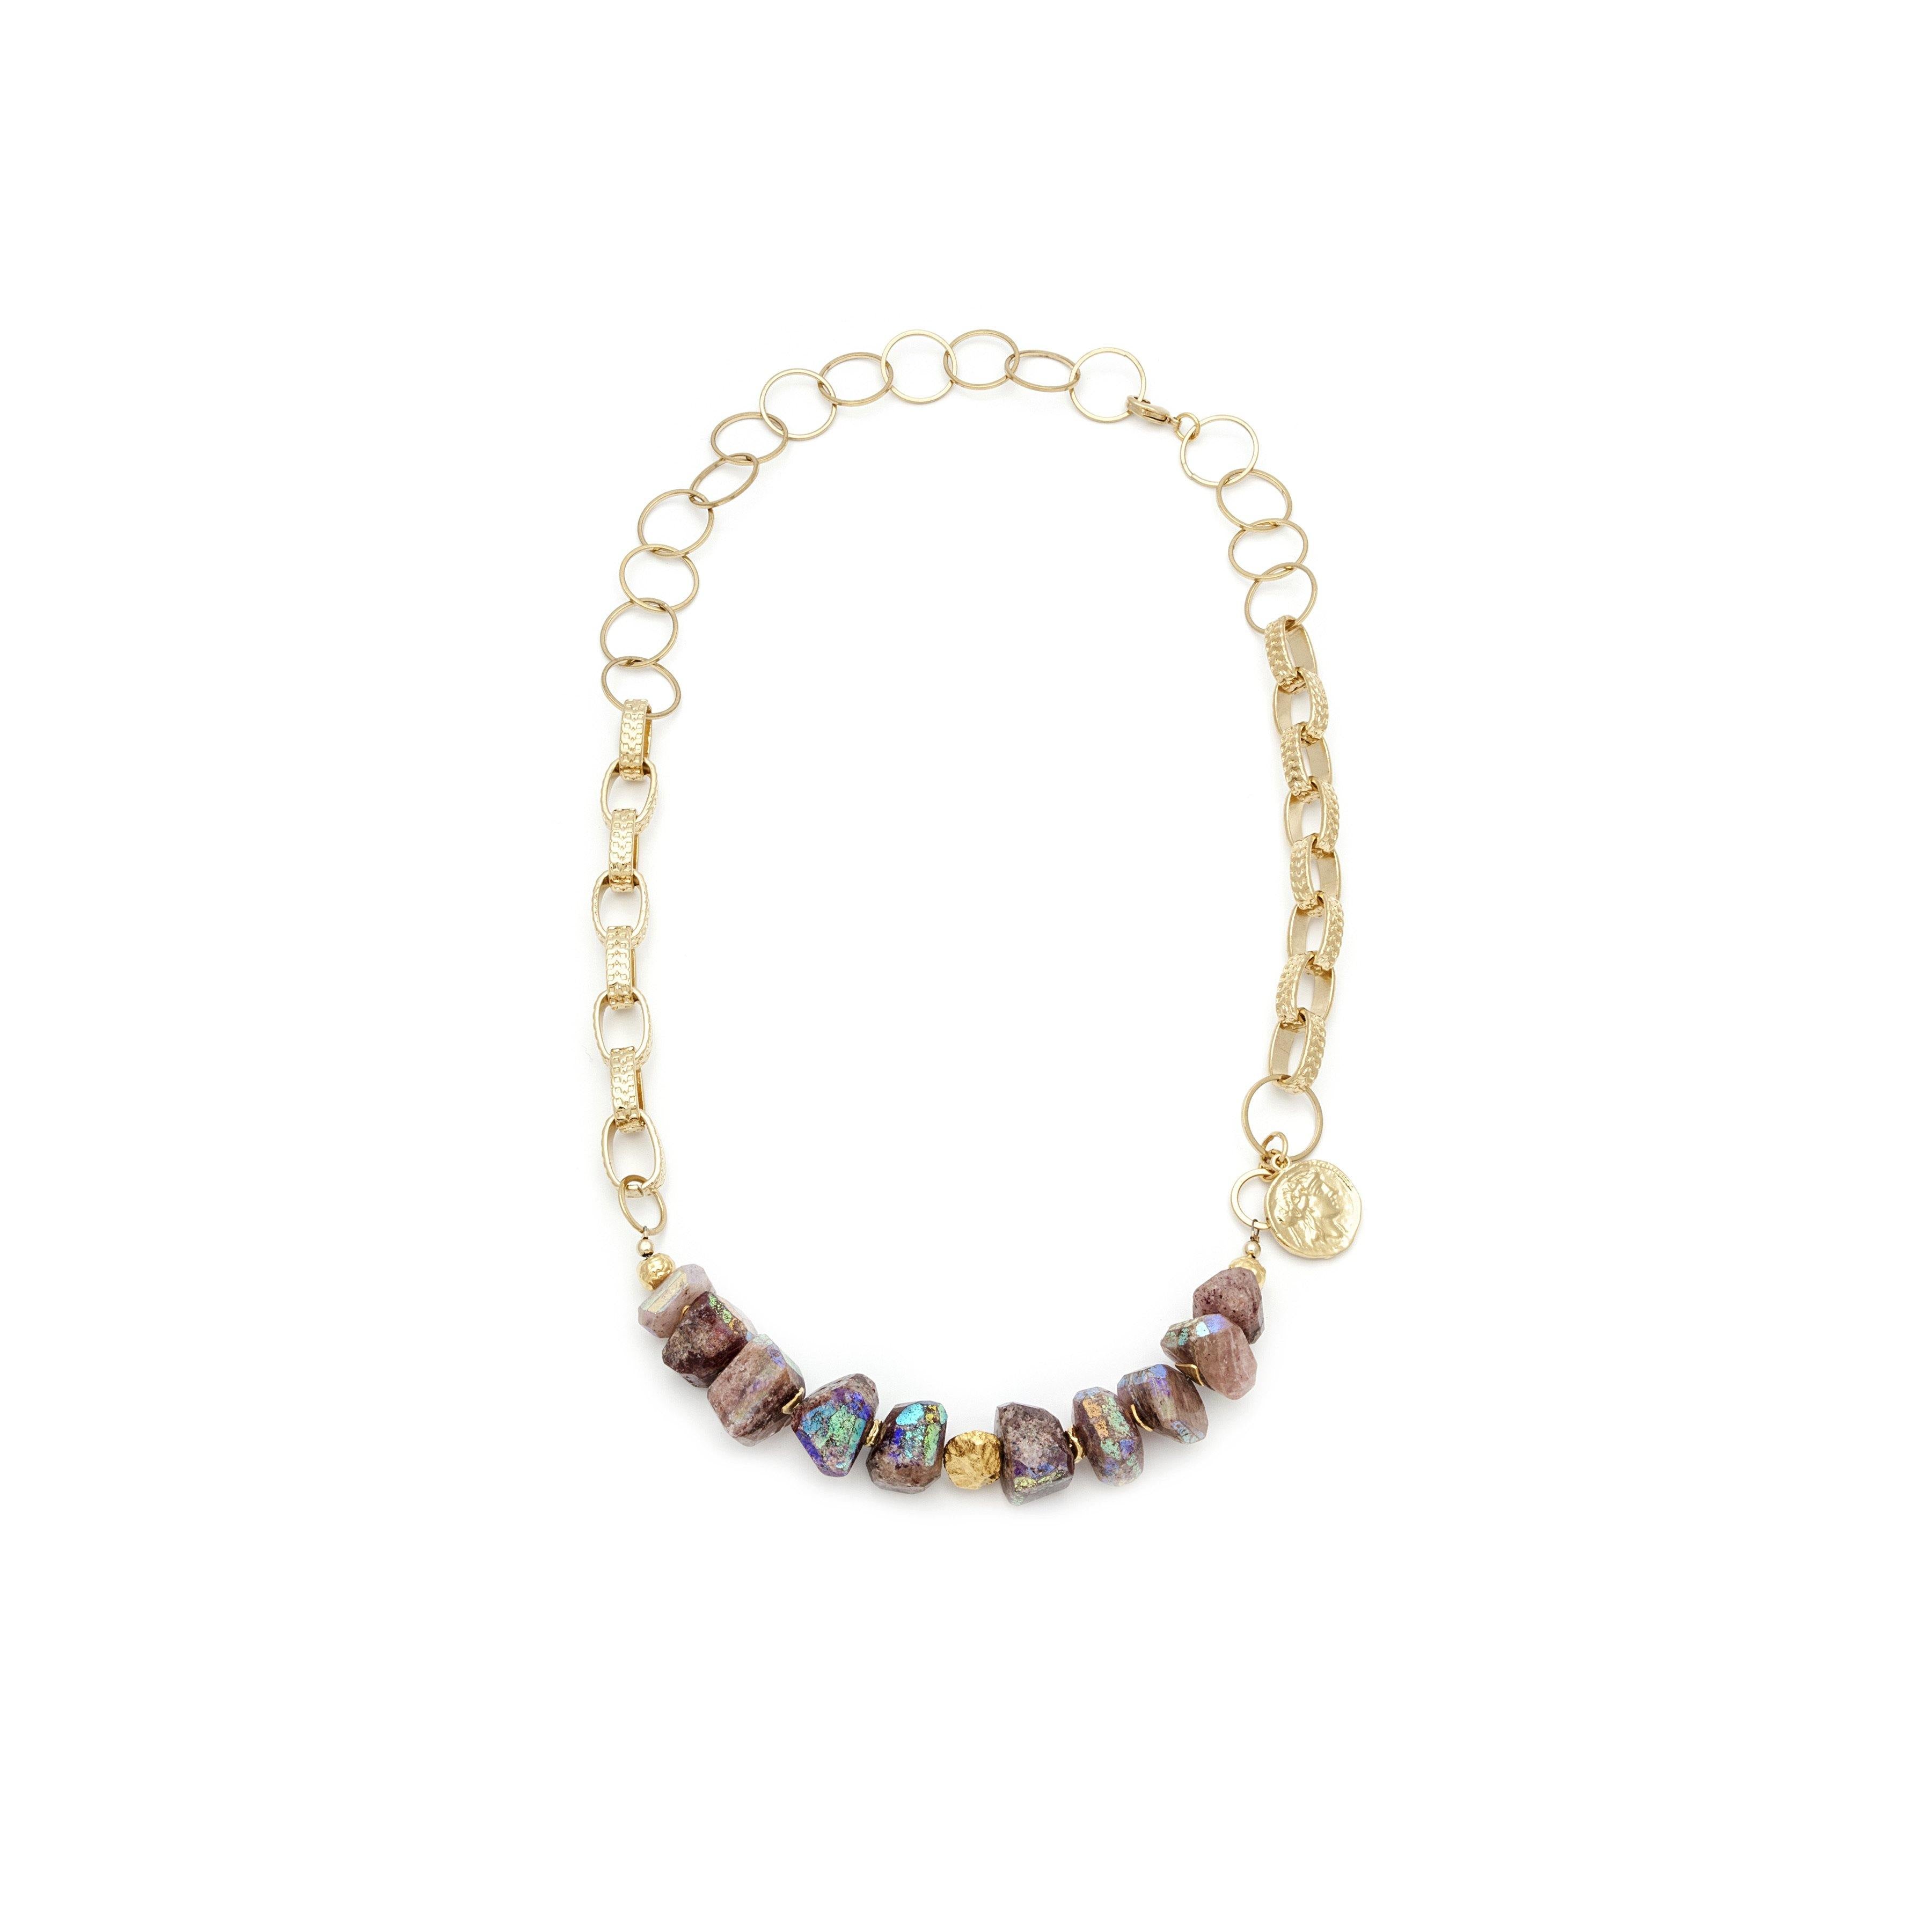 Ruby Statement Necklace - Irit Sorokin Designs Jewelry